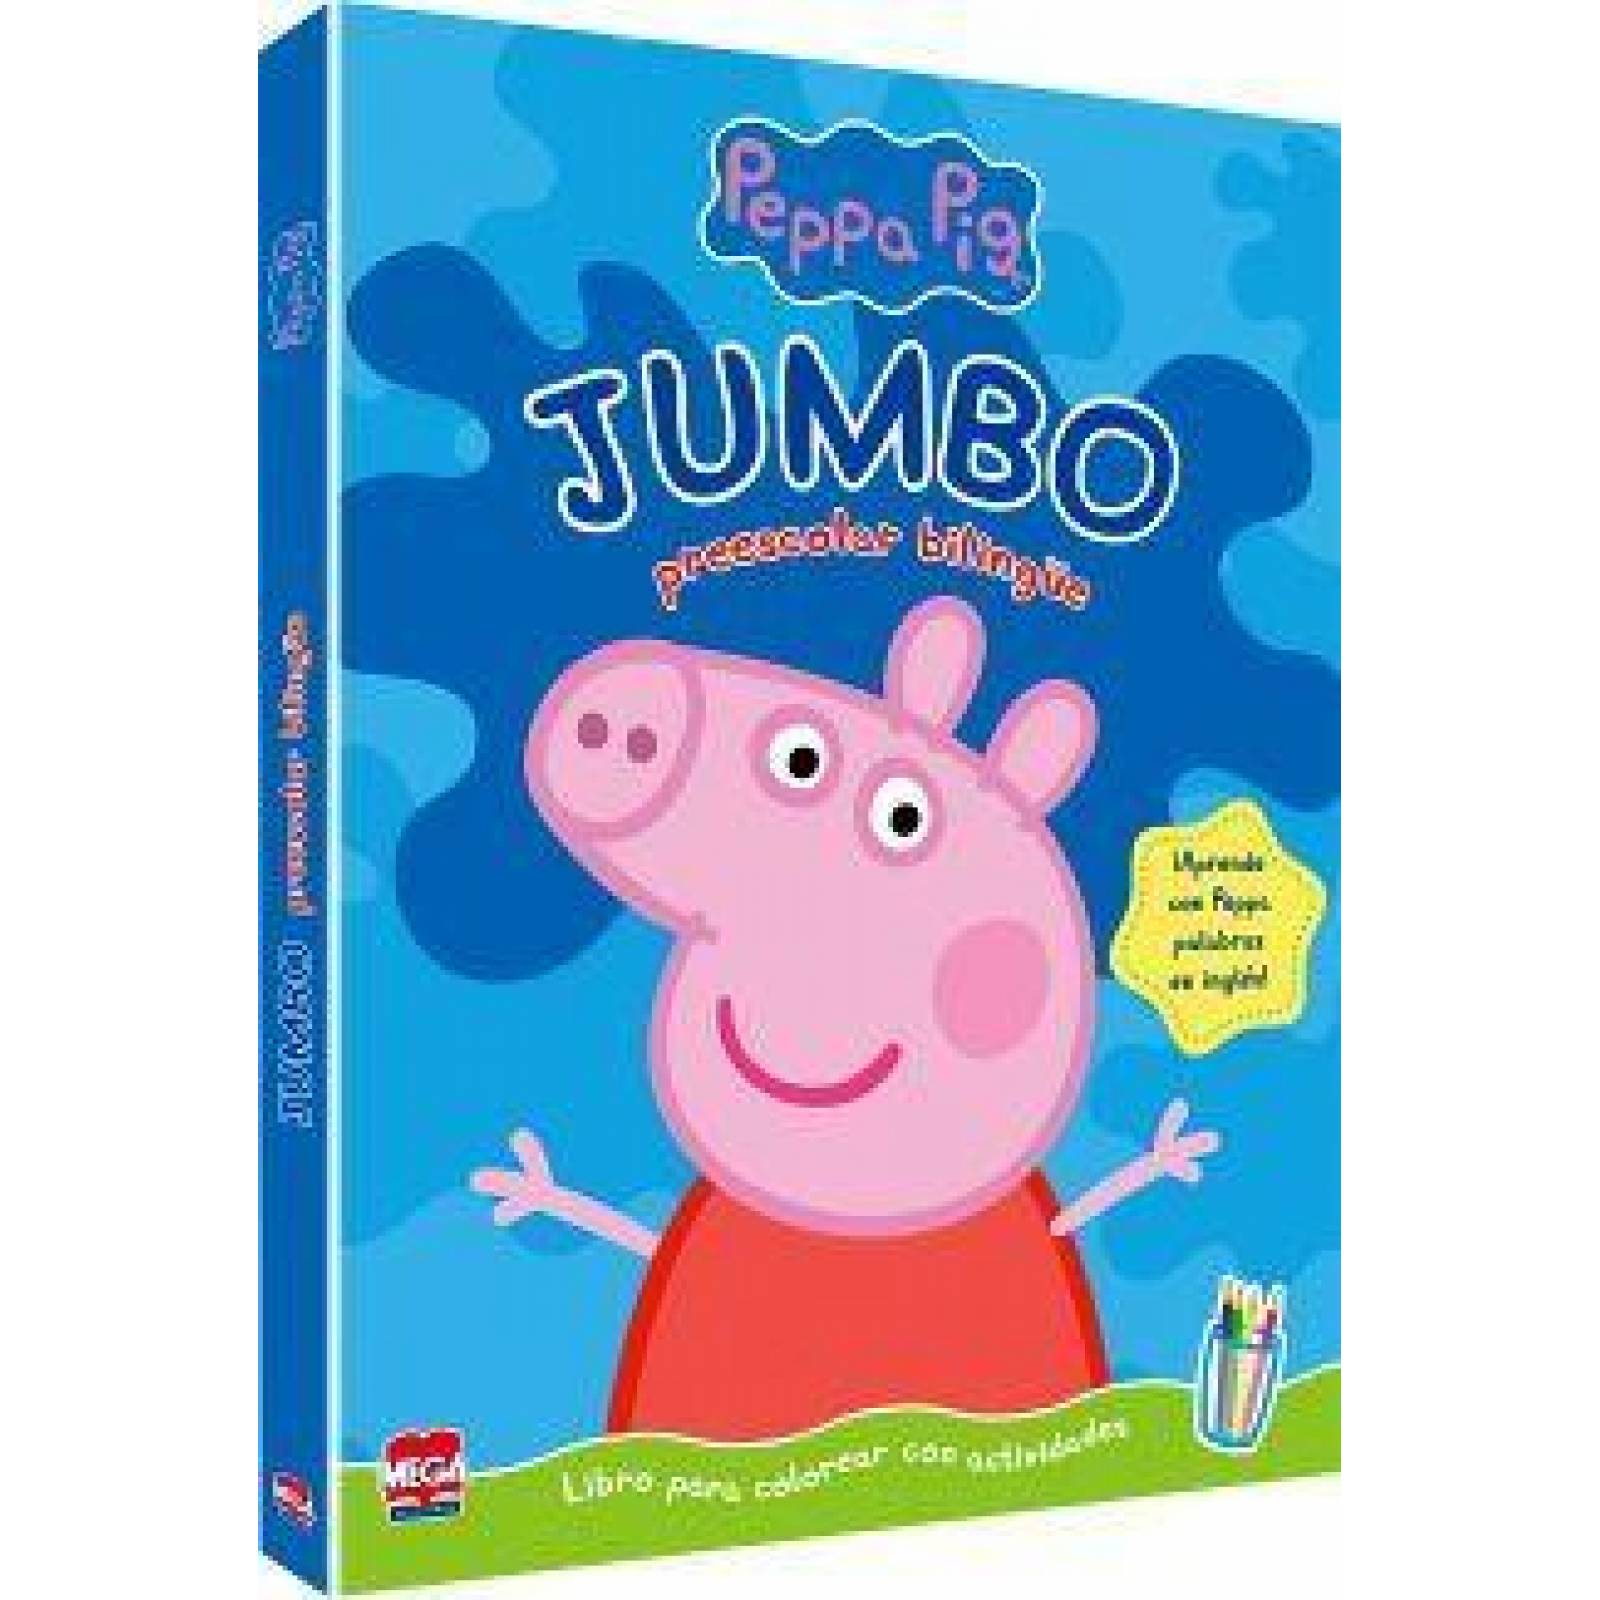 Peppa Pig Jumbo preescolar bilingüe 